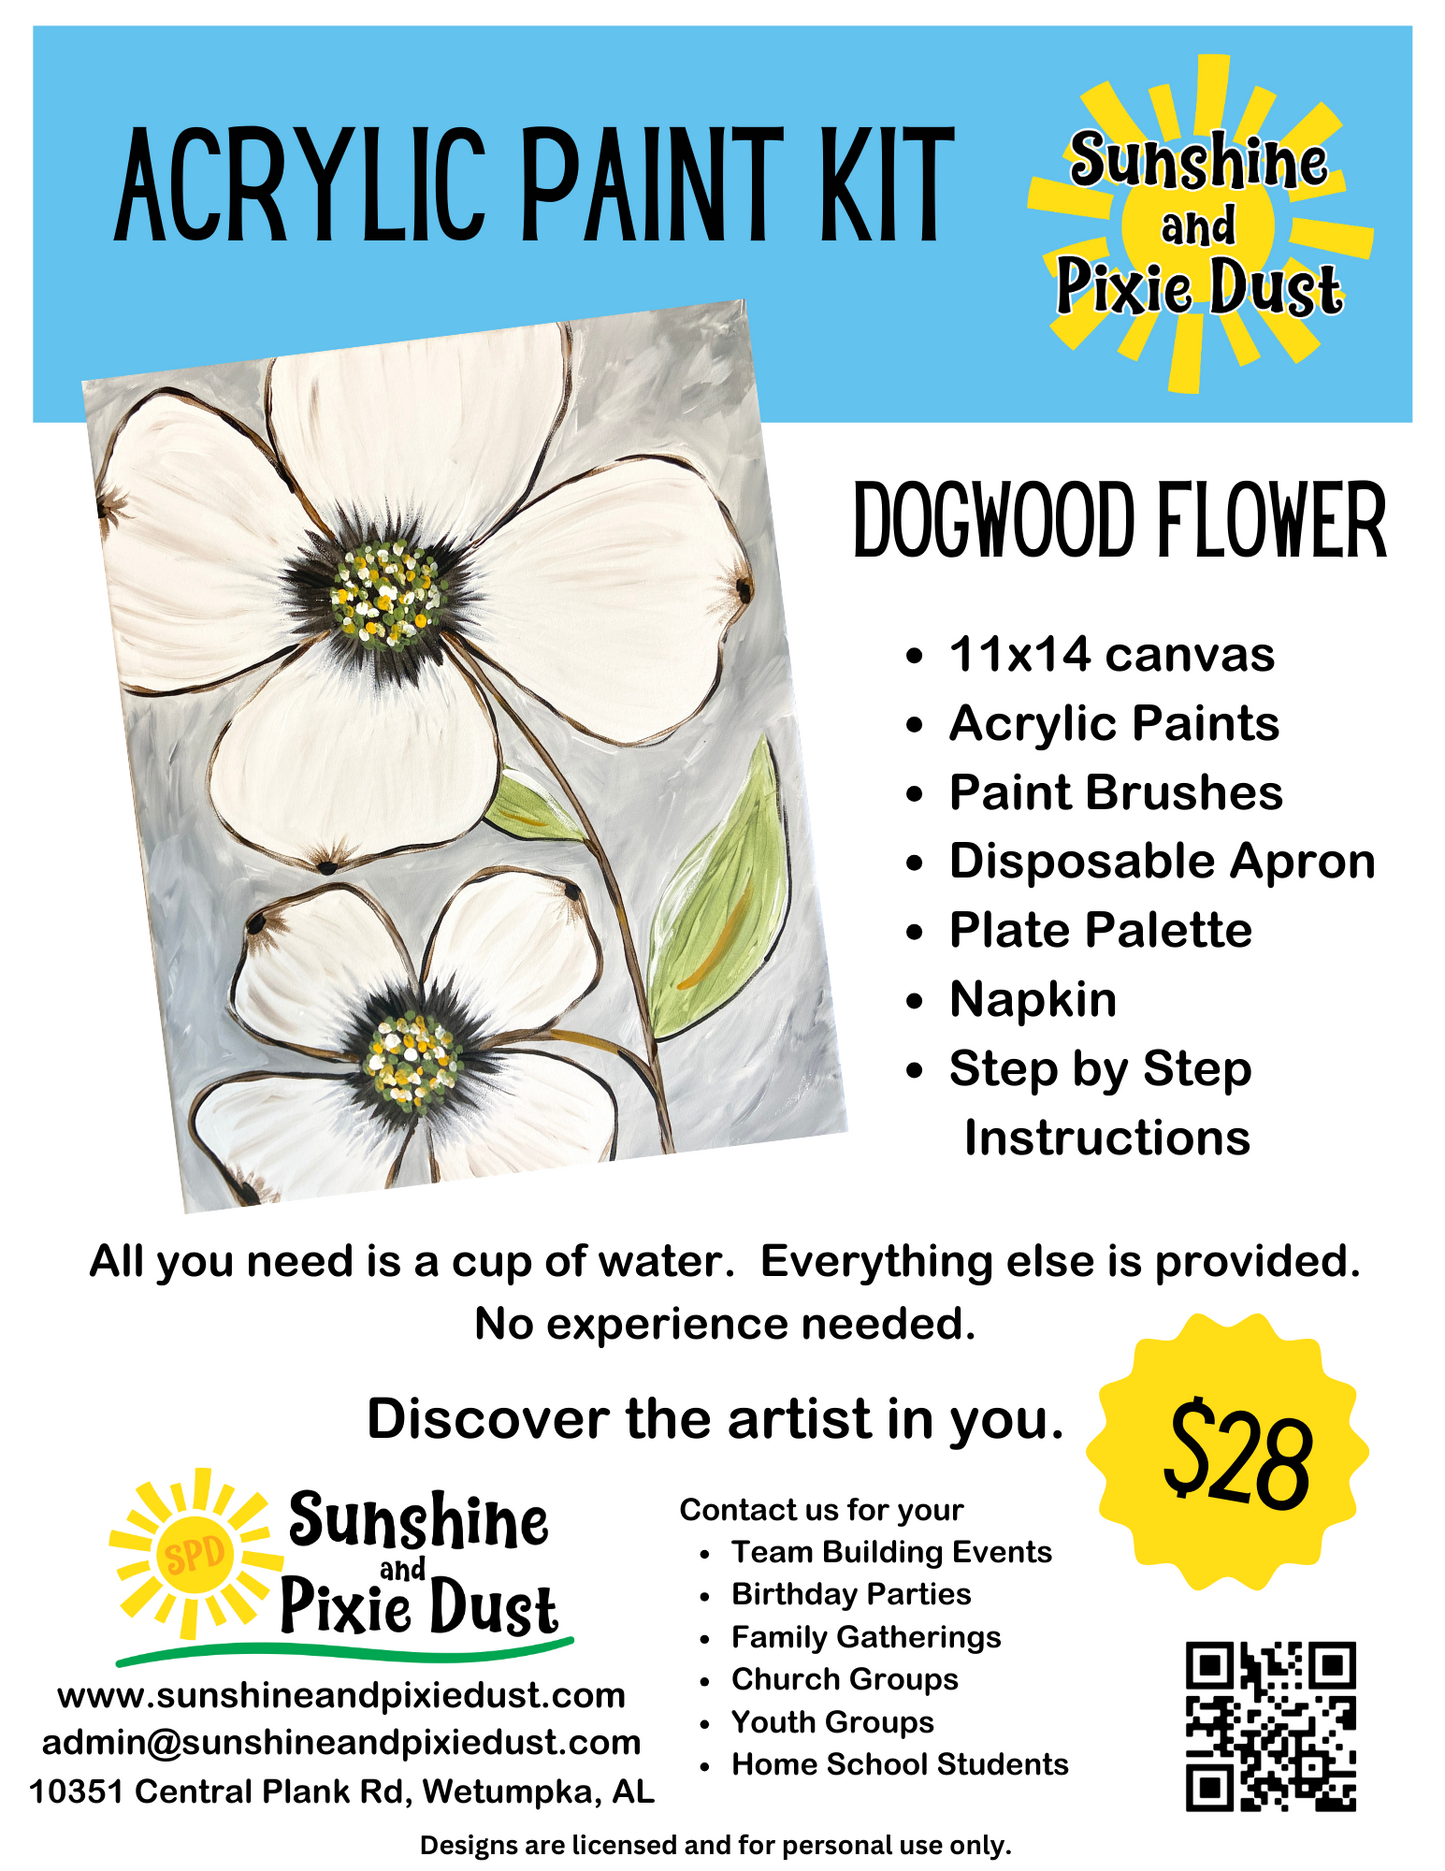 Dogwood Flower Acrylic Paint Kit